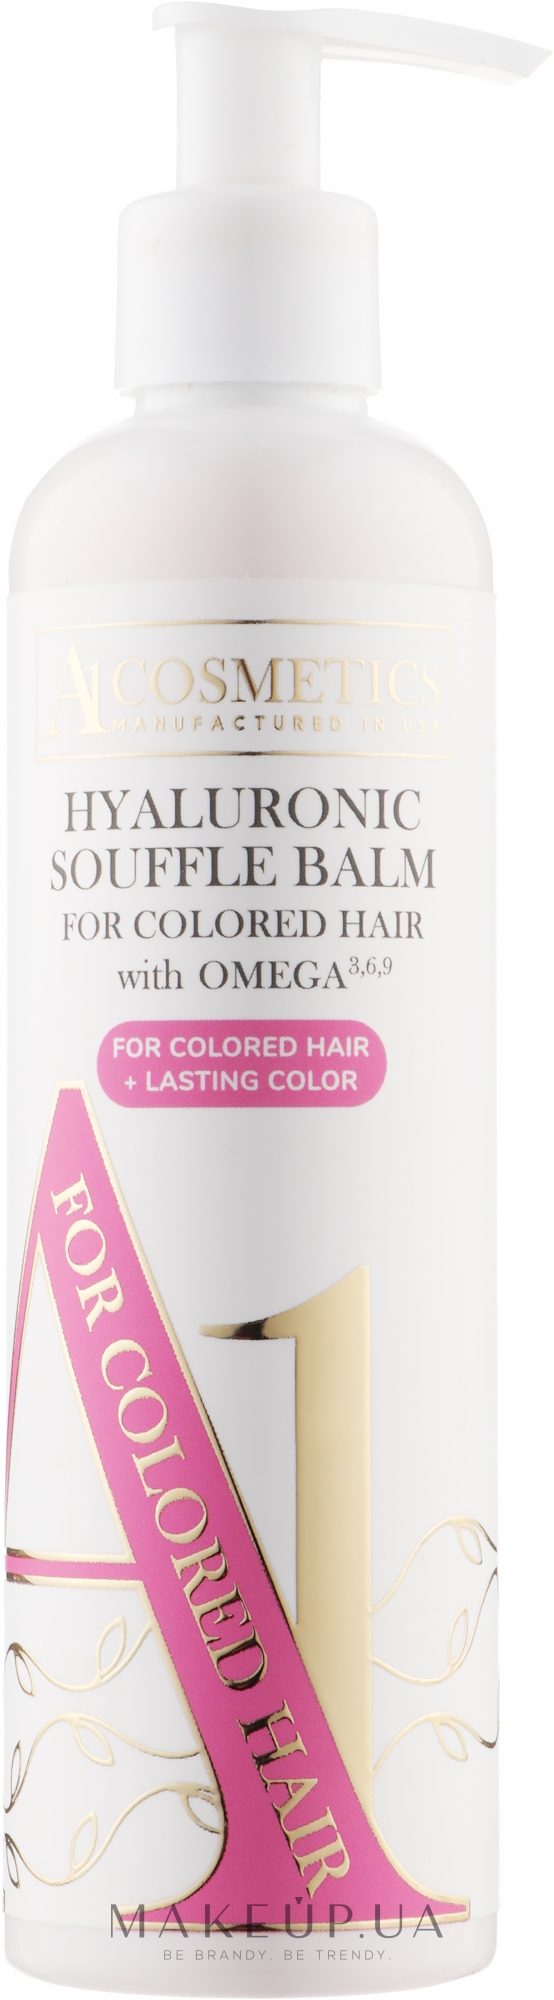 Гіалуроновий бальзам-суфле для фарбованого волосся - A1 Cosmetics For Colored Hair Hyaluronic Souffle Balm With Omega 3-6-9 + Lasting Color — фото 250ml